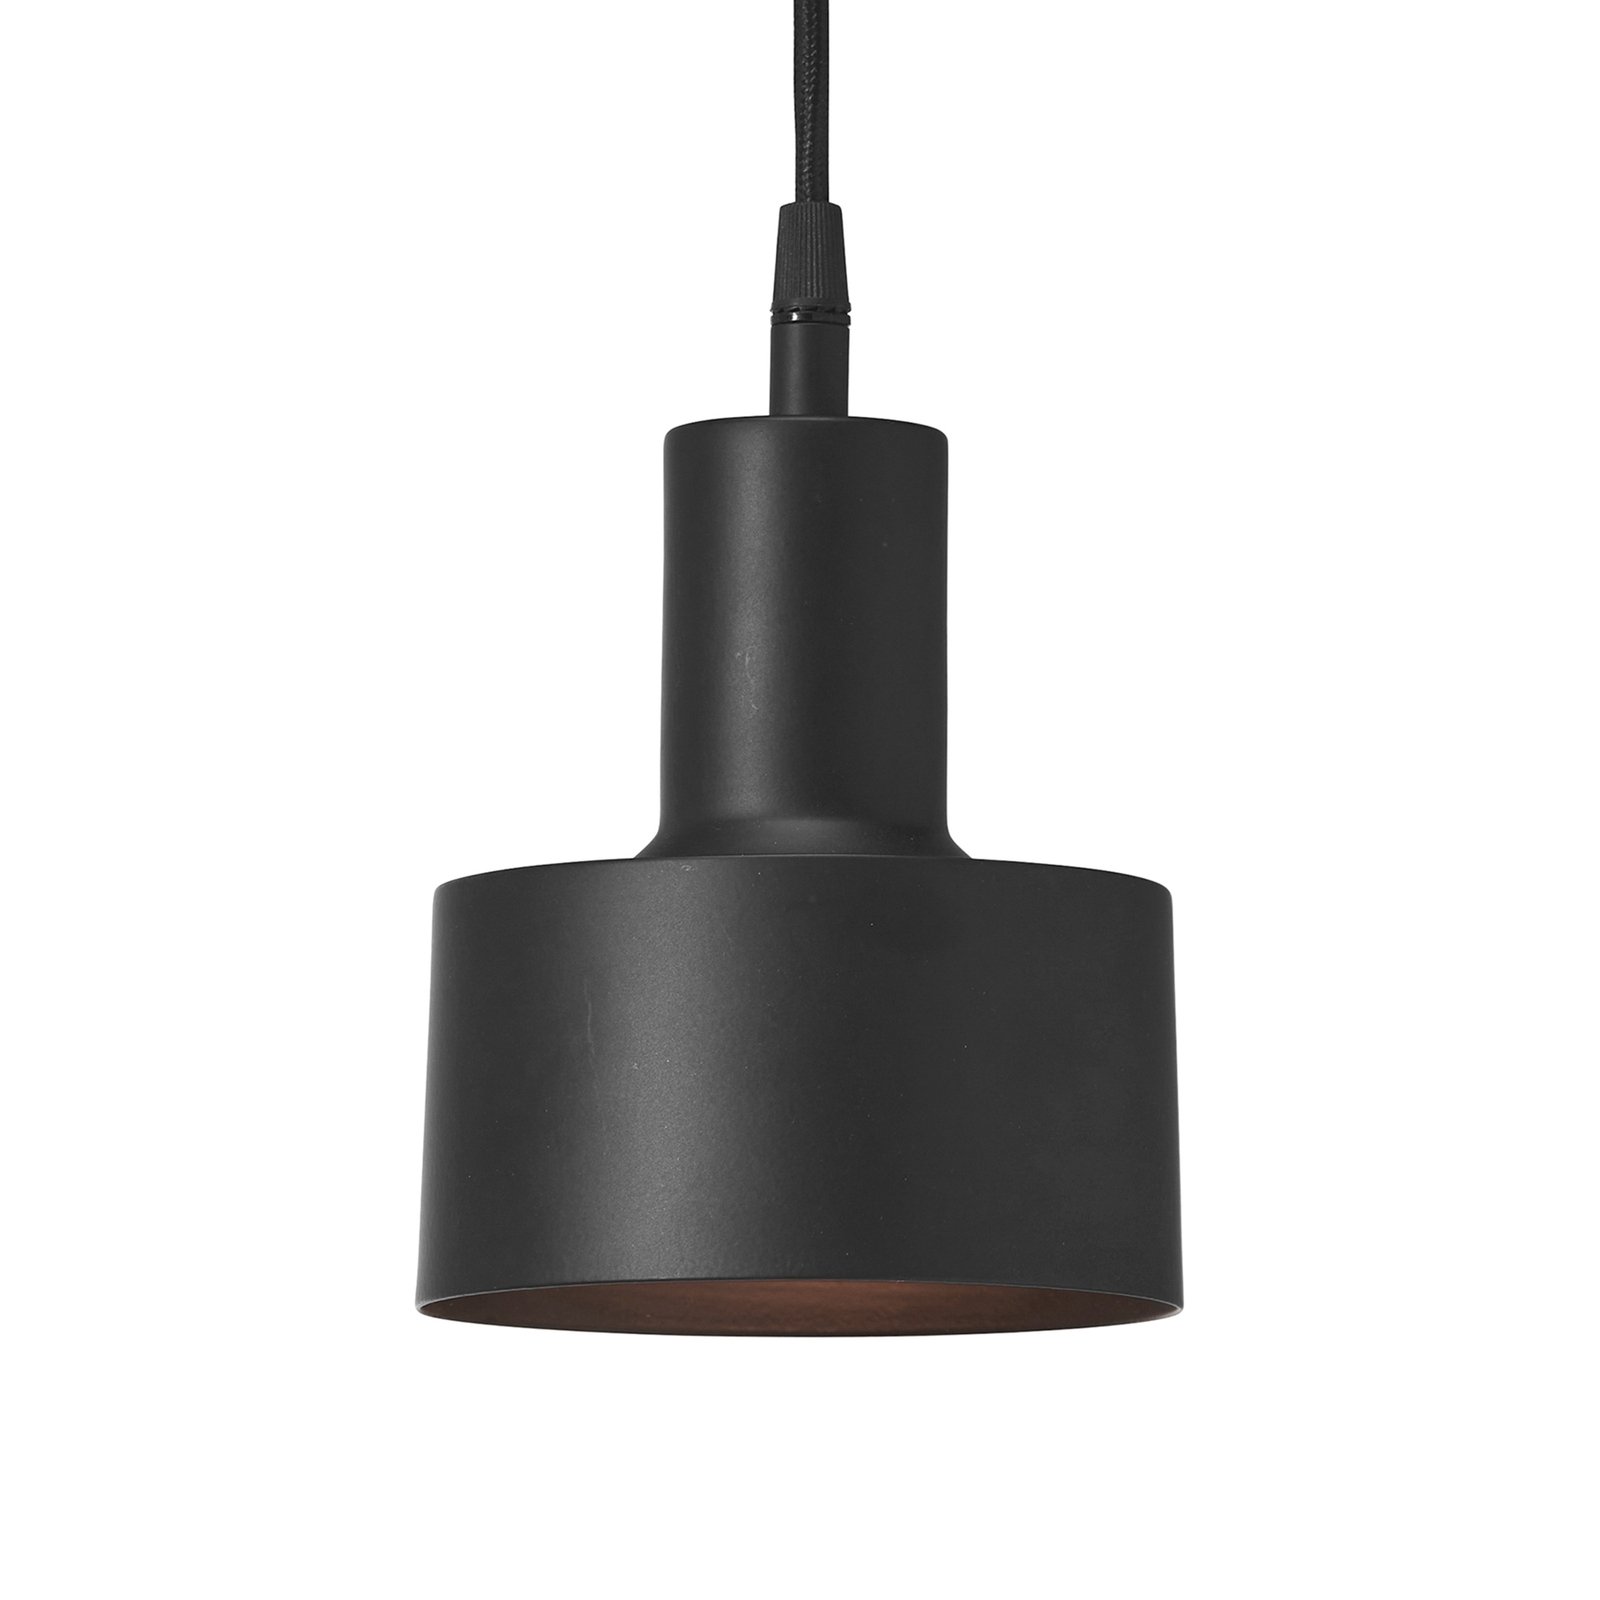 PR Home Solo Small lógó világítás Ø13cm fekete